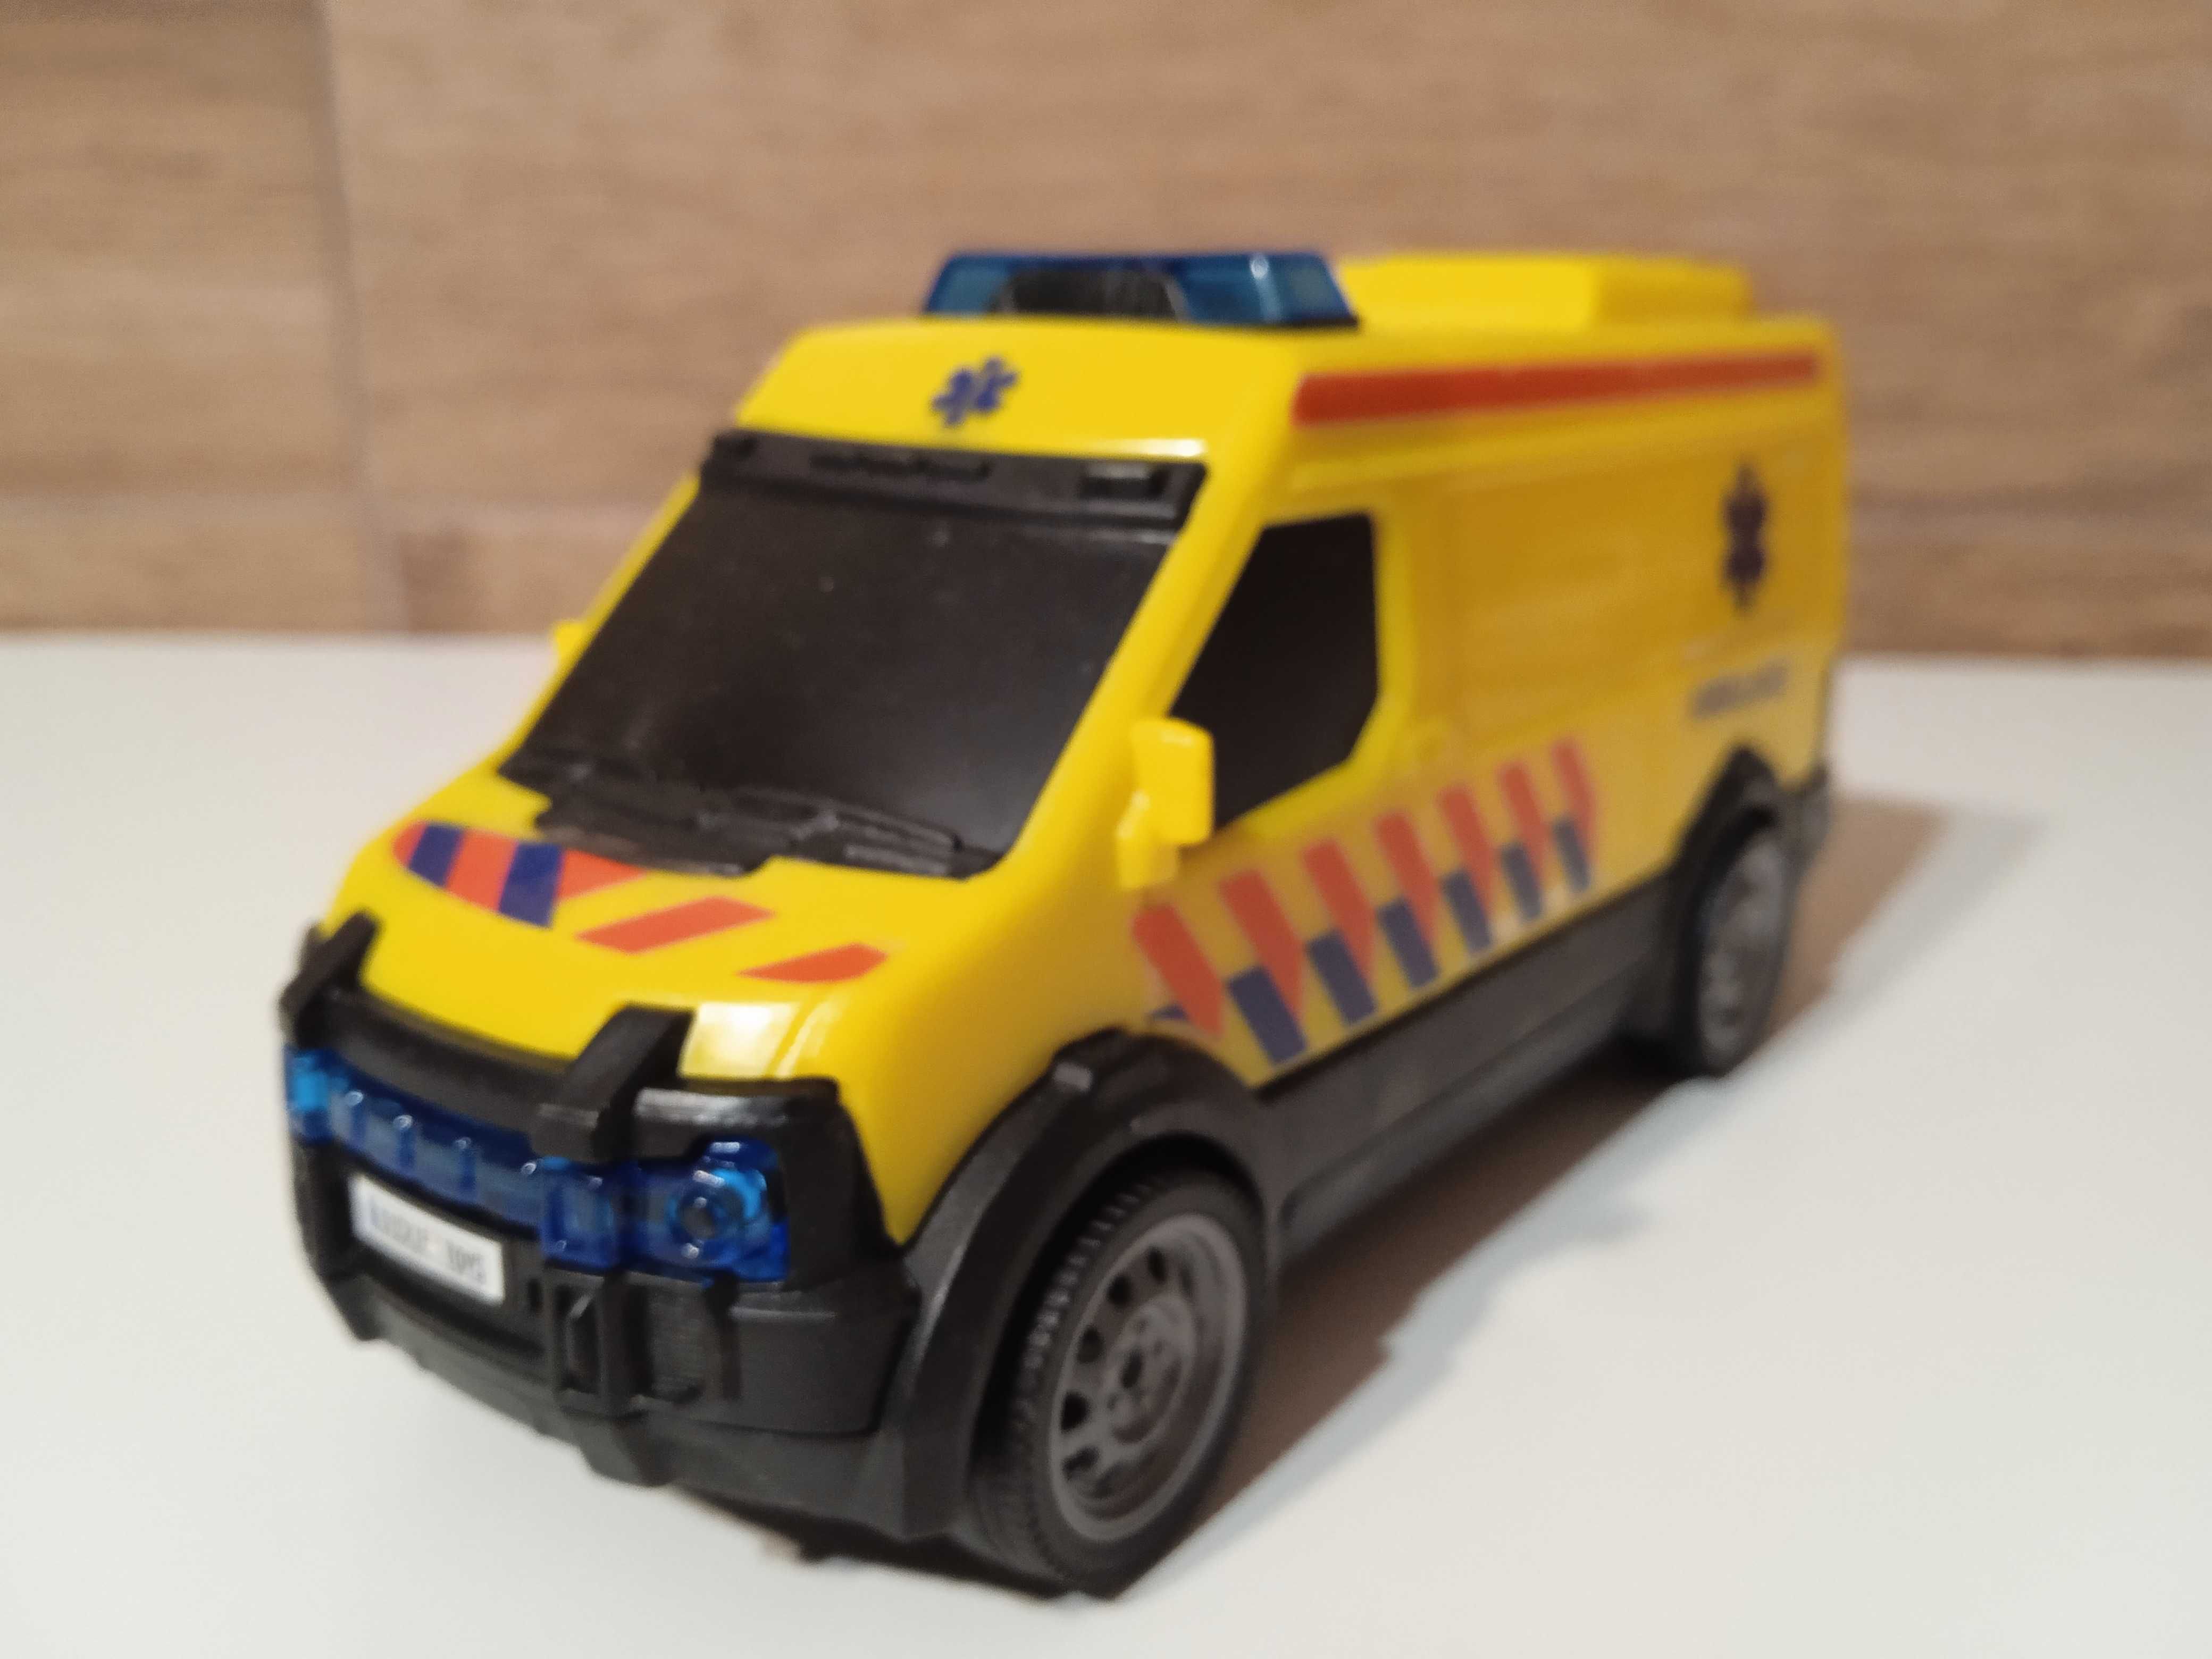 model ambulans karetka